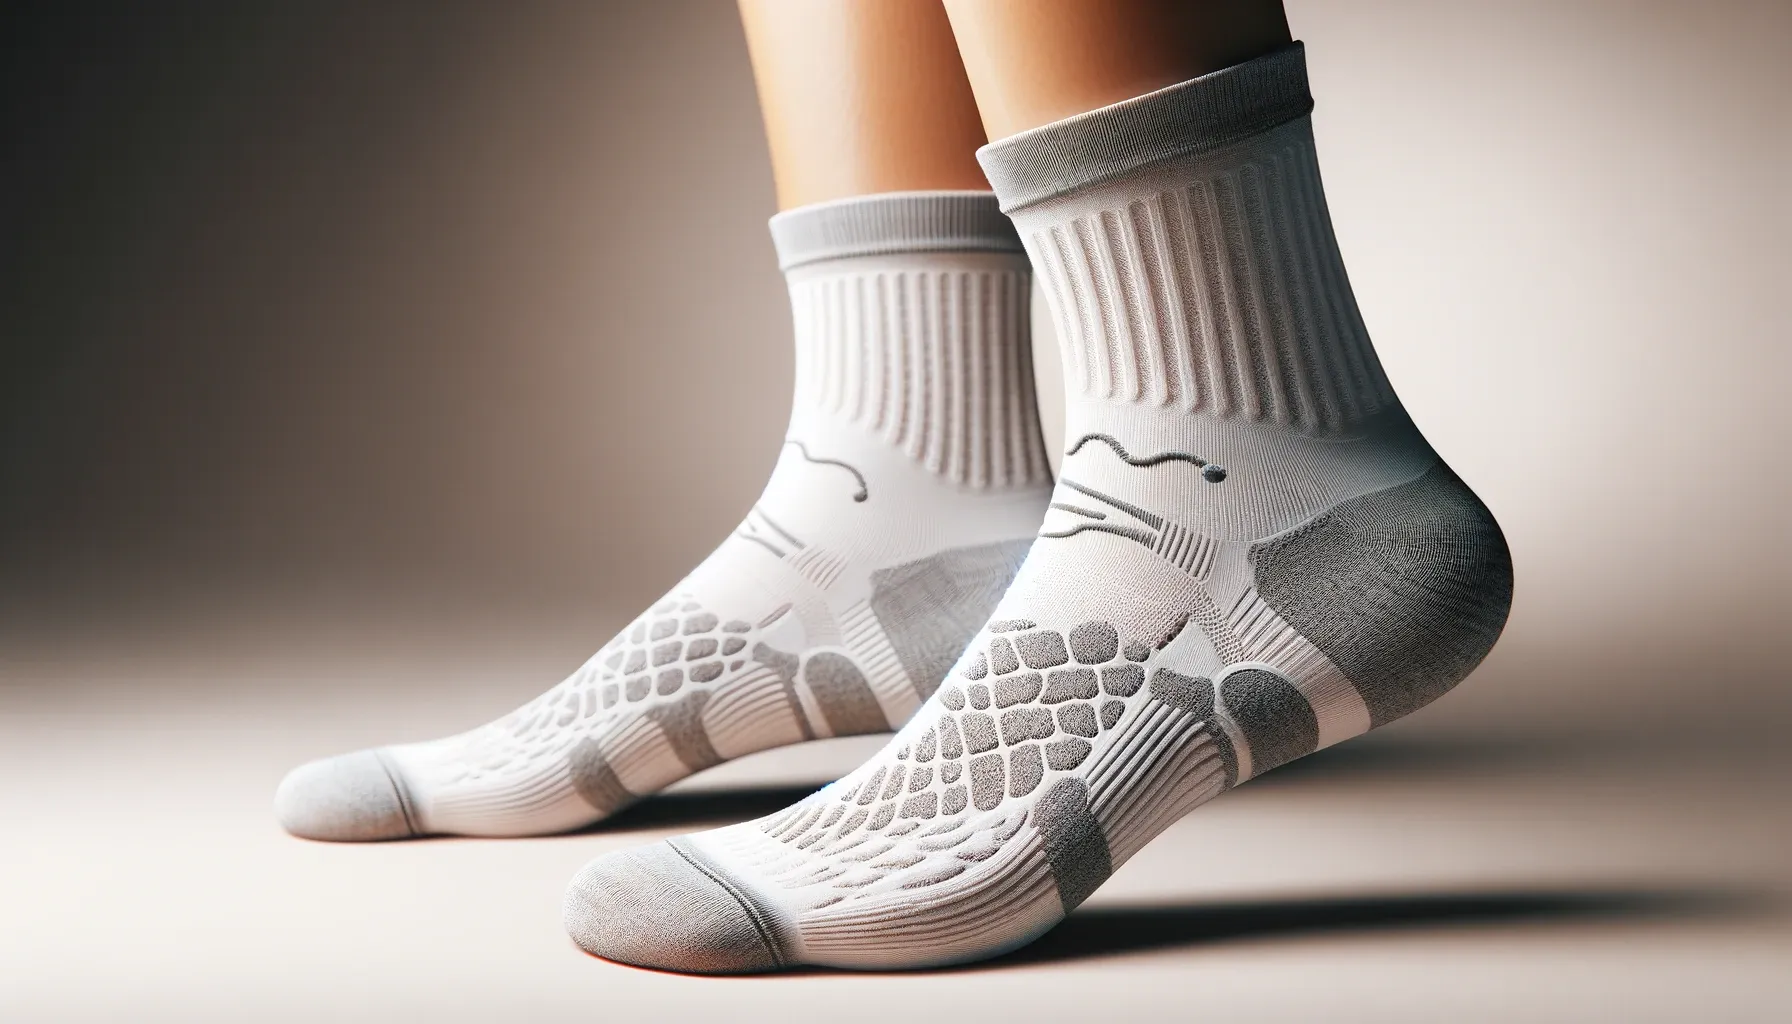 Comparing Diabetic Socks vs Compression Socks: What Makes Them Unique?